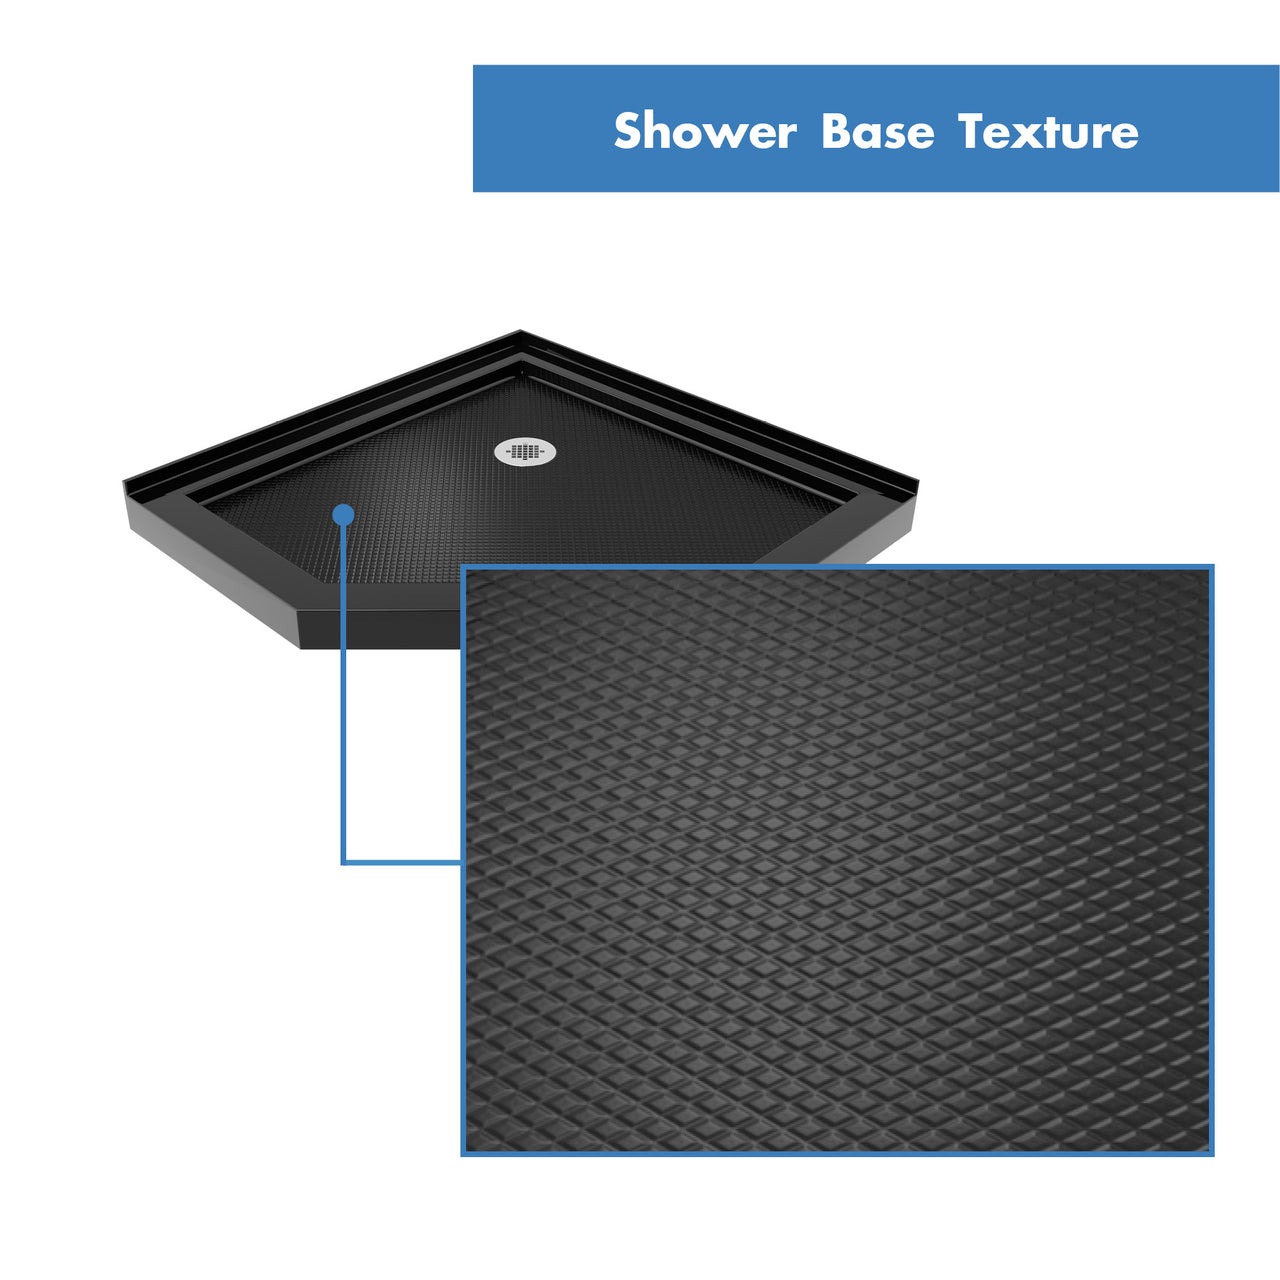 DreamLine Prism 42 in. x 42 in. x 74 3/4 in. H Frameless Pivot Shower Enclosure and SlimLine Shower Base Kit - BNGBath